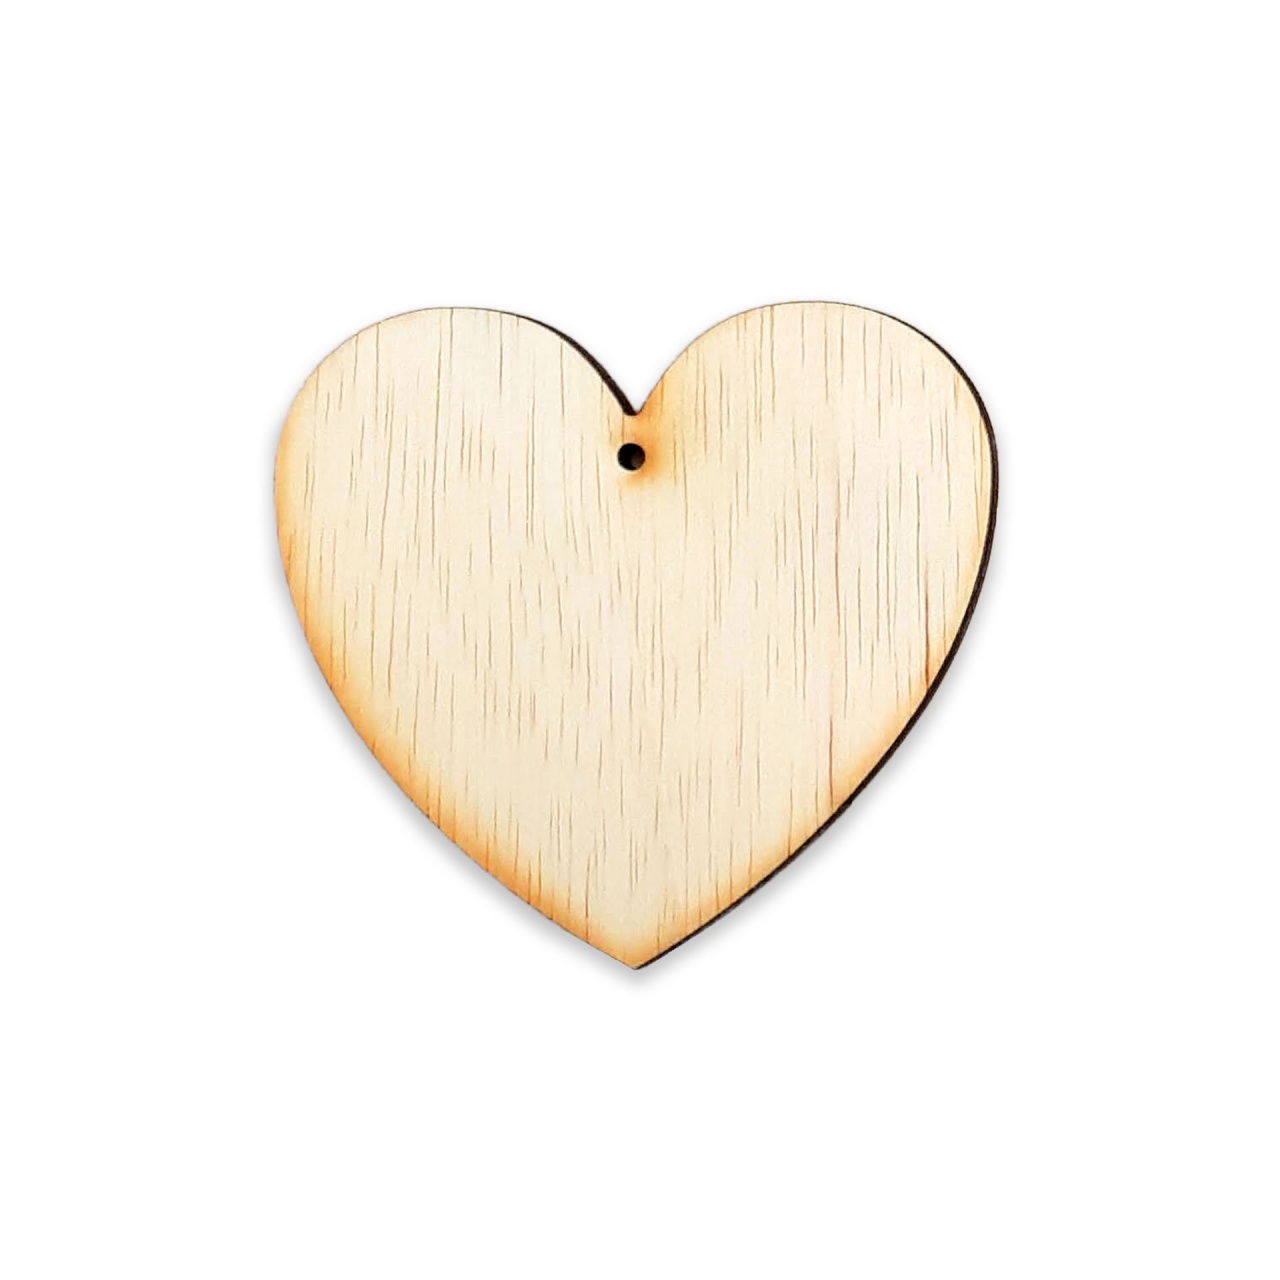 Inimă, 4×3,7 cm, placaj :: 4×3,7 cm